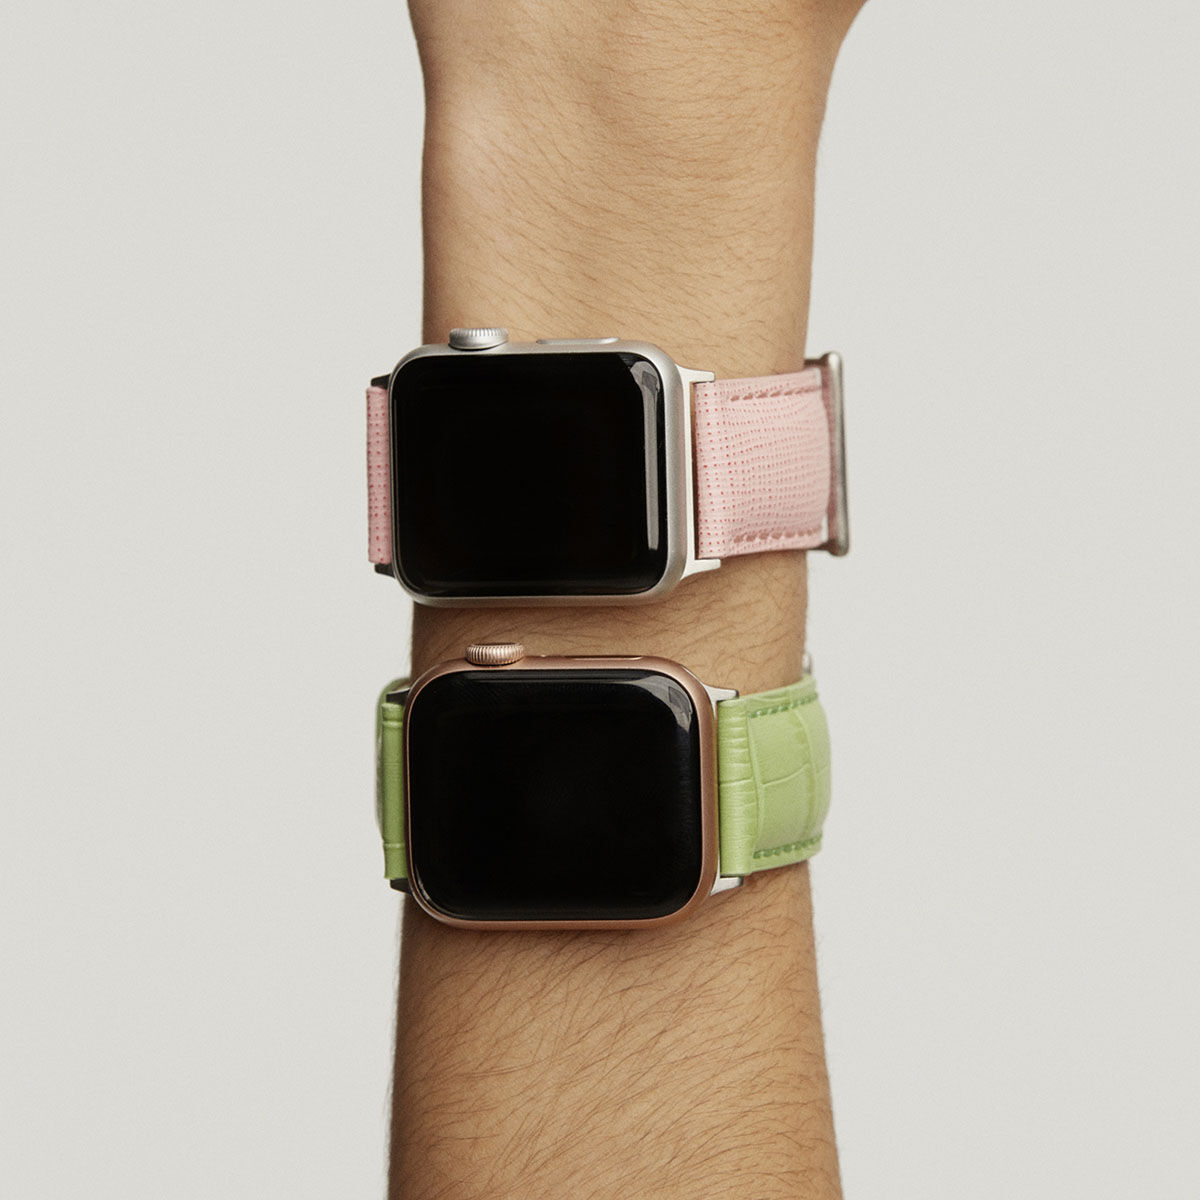 Pink leather Apple Watch strap¬†, IWSTRAP-PK, hi-res